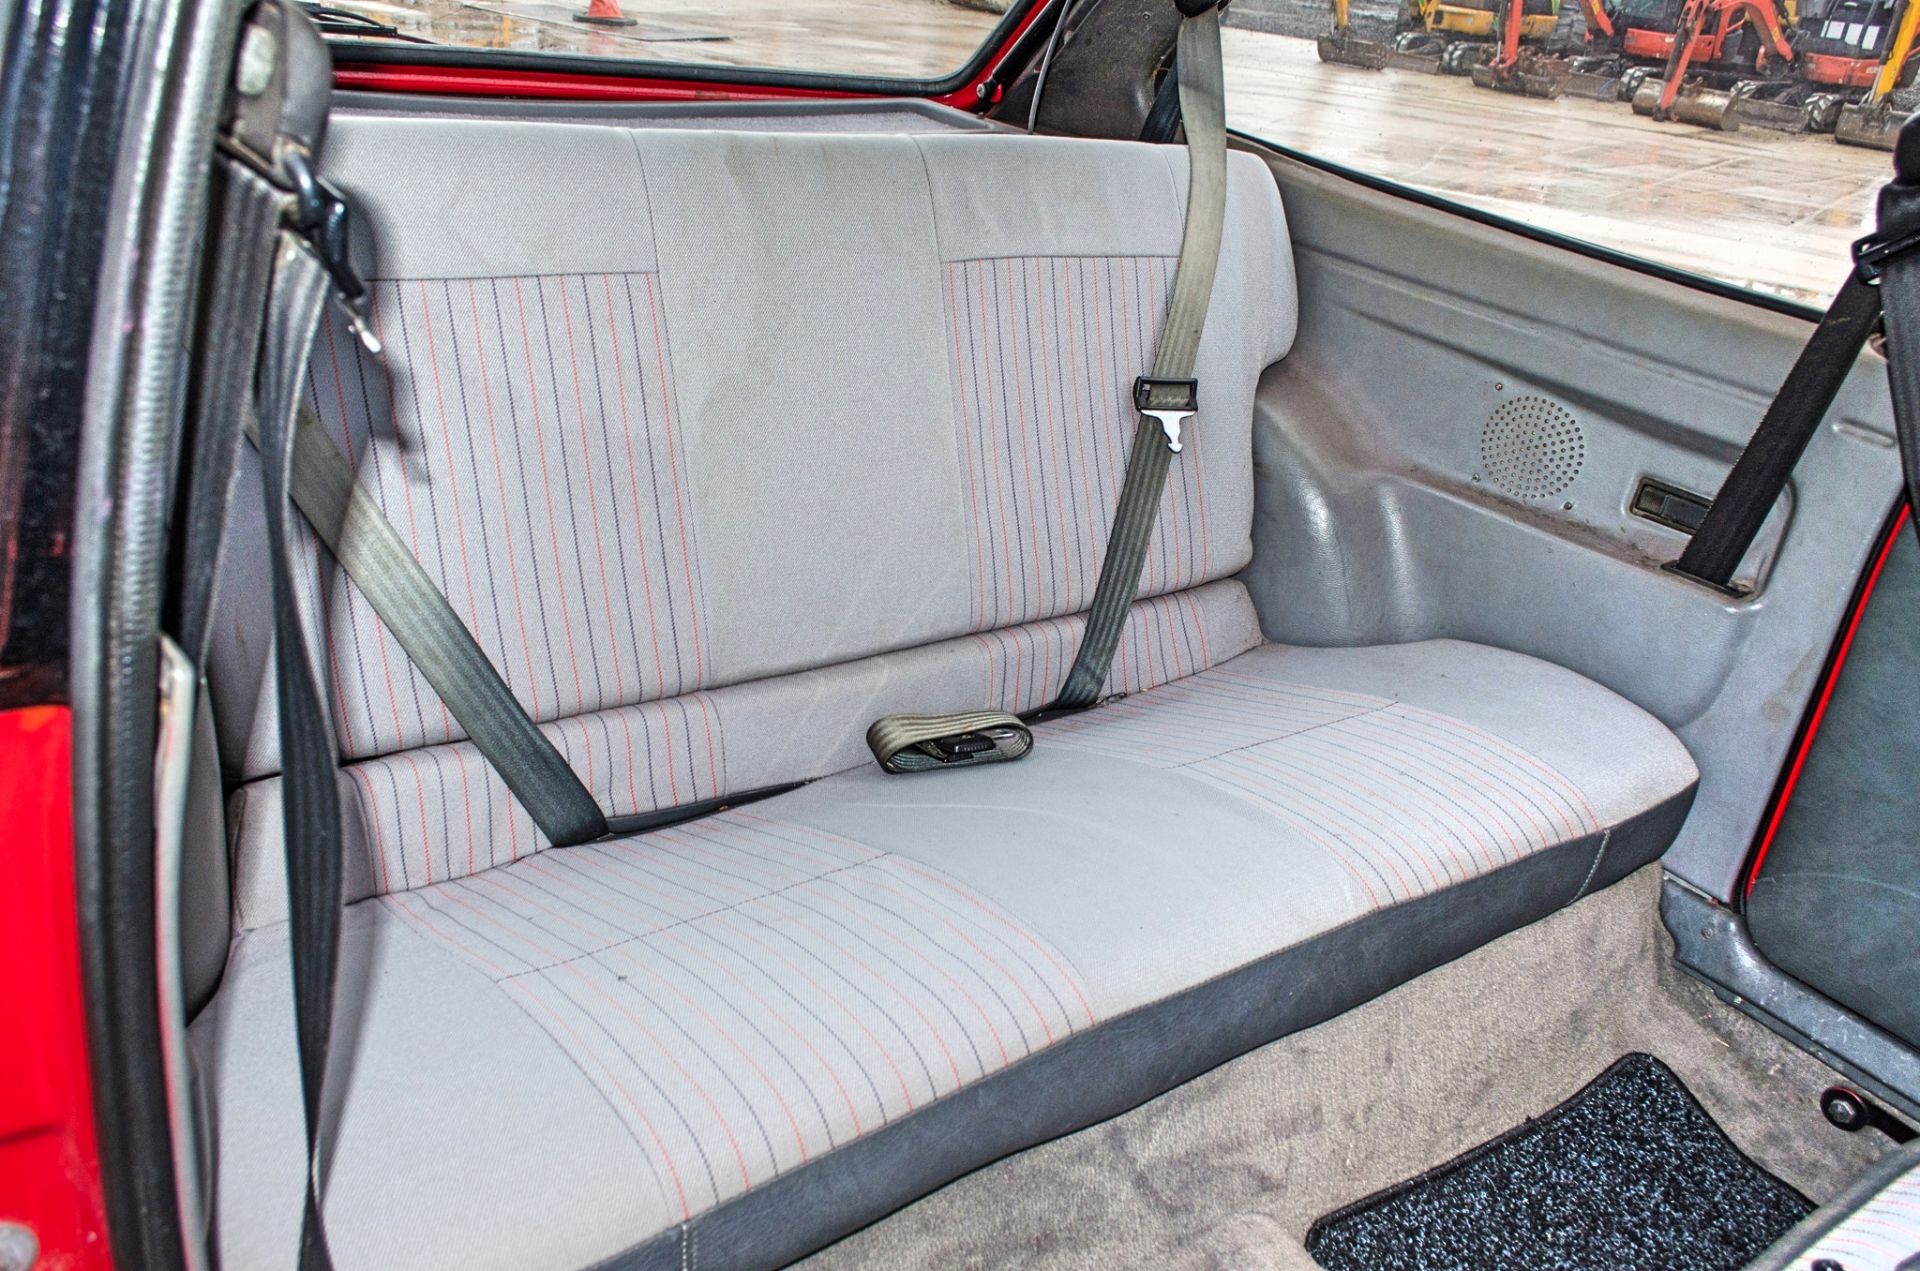 1983 Ford Fiesta XR2 1600cc 3 door hatchback - Image 31 of 47